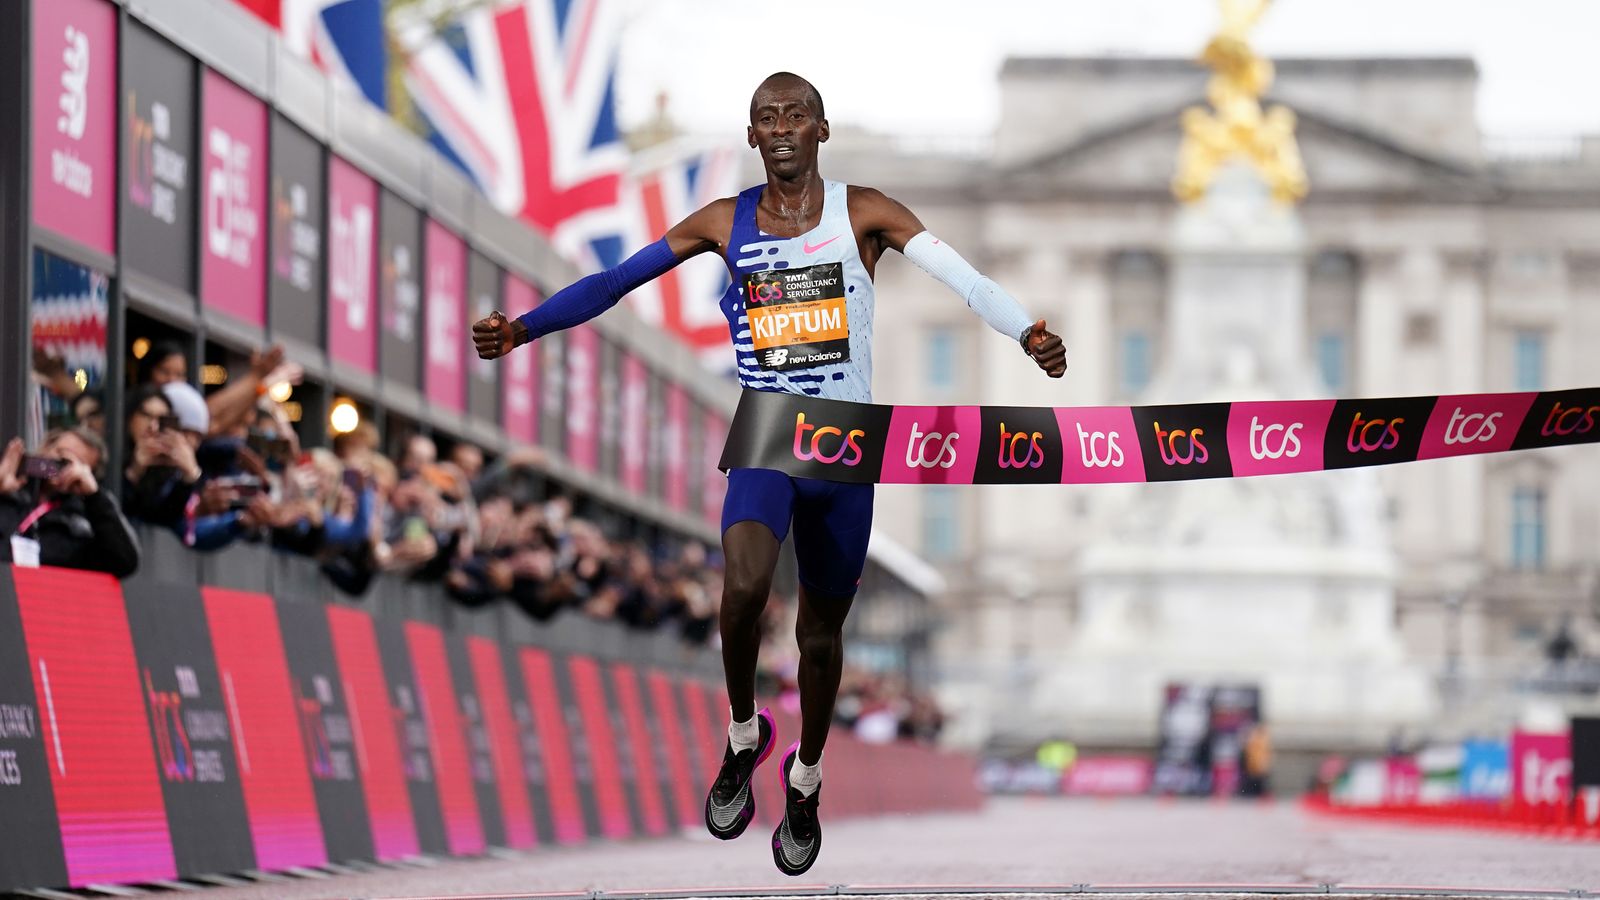 Kelvin Kiptum: World marathon record holder and his coach die in car crash